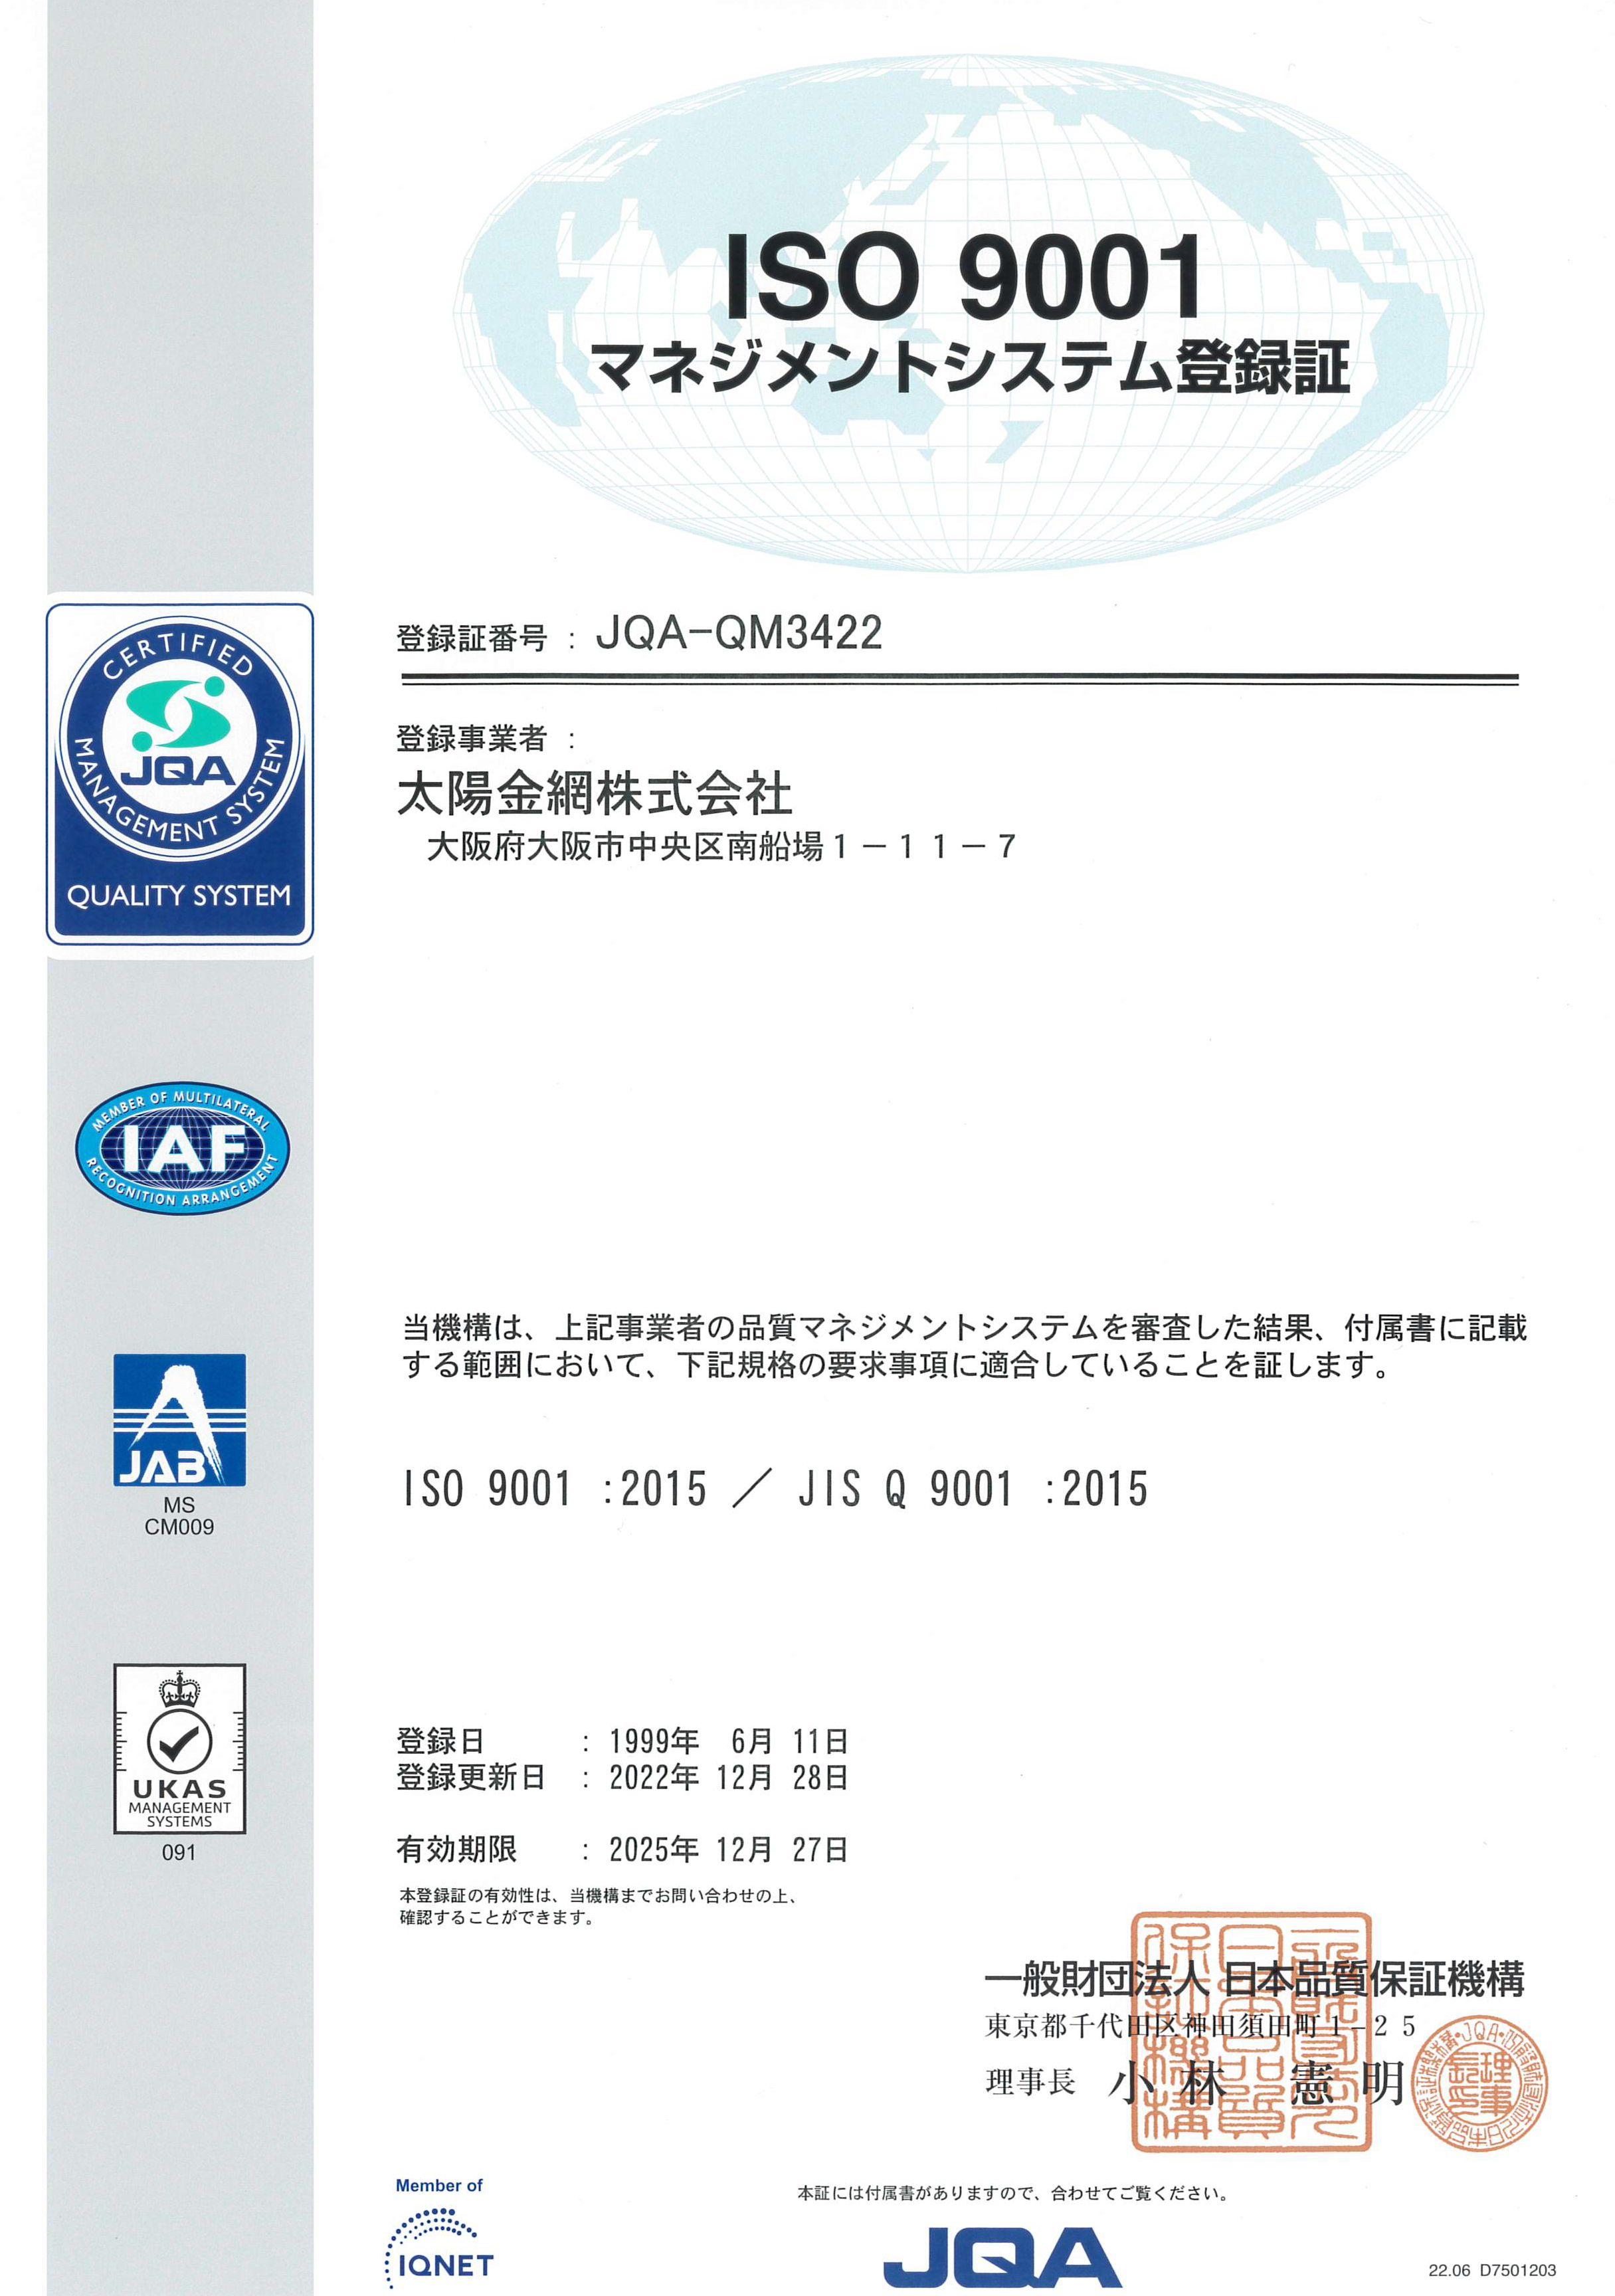 ISO9001end20251227-1.jpg